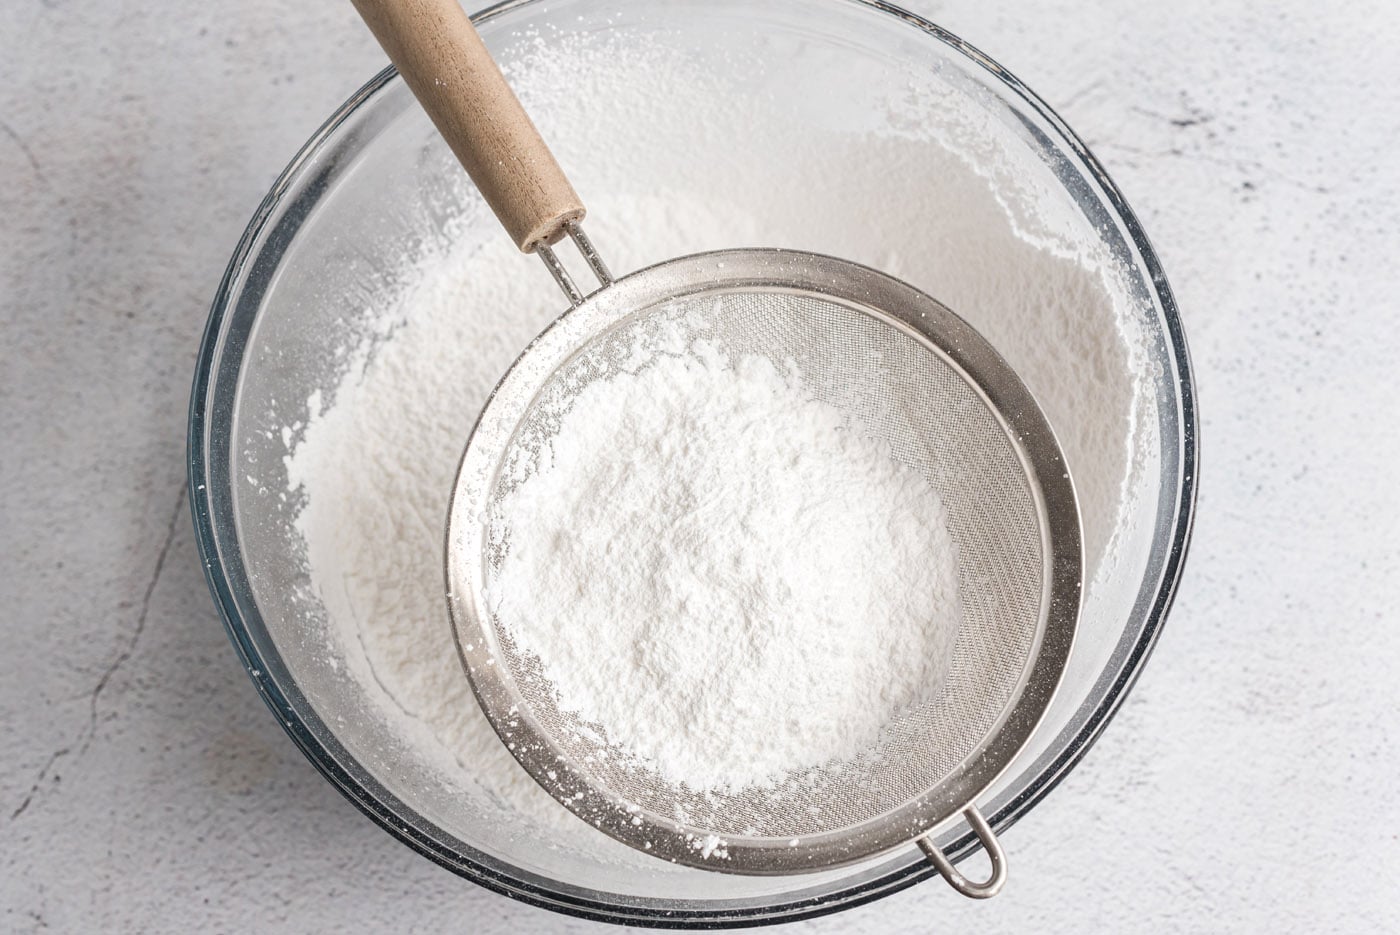 sifting powdered sugar in a bowl